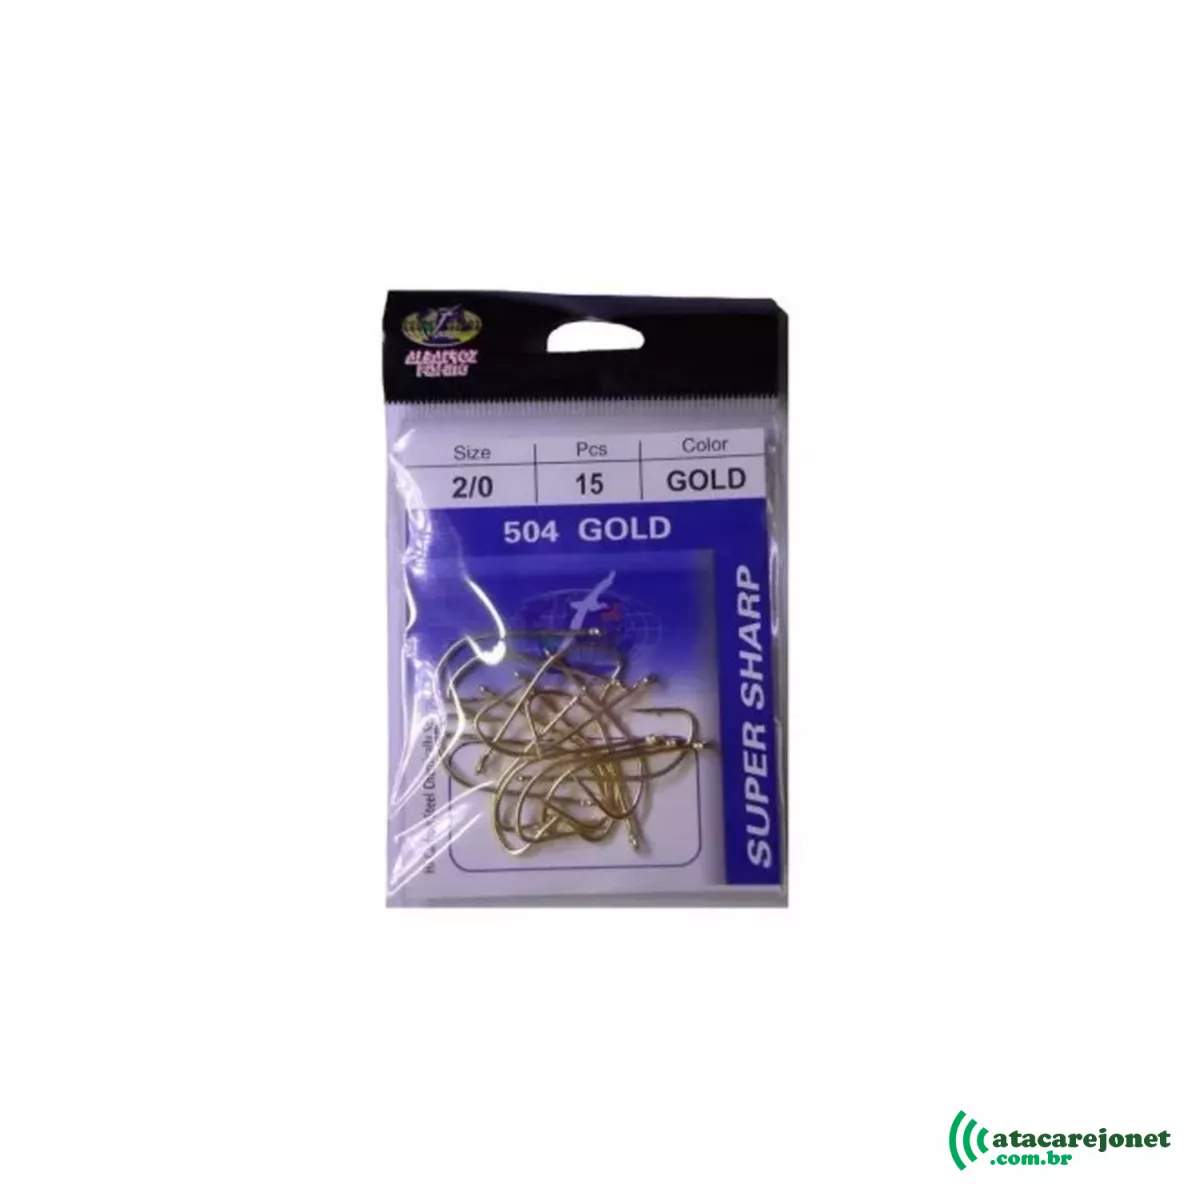 Anzol para Pesca Gold Embalagem Cartela n. 4 - Albatroz